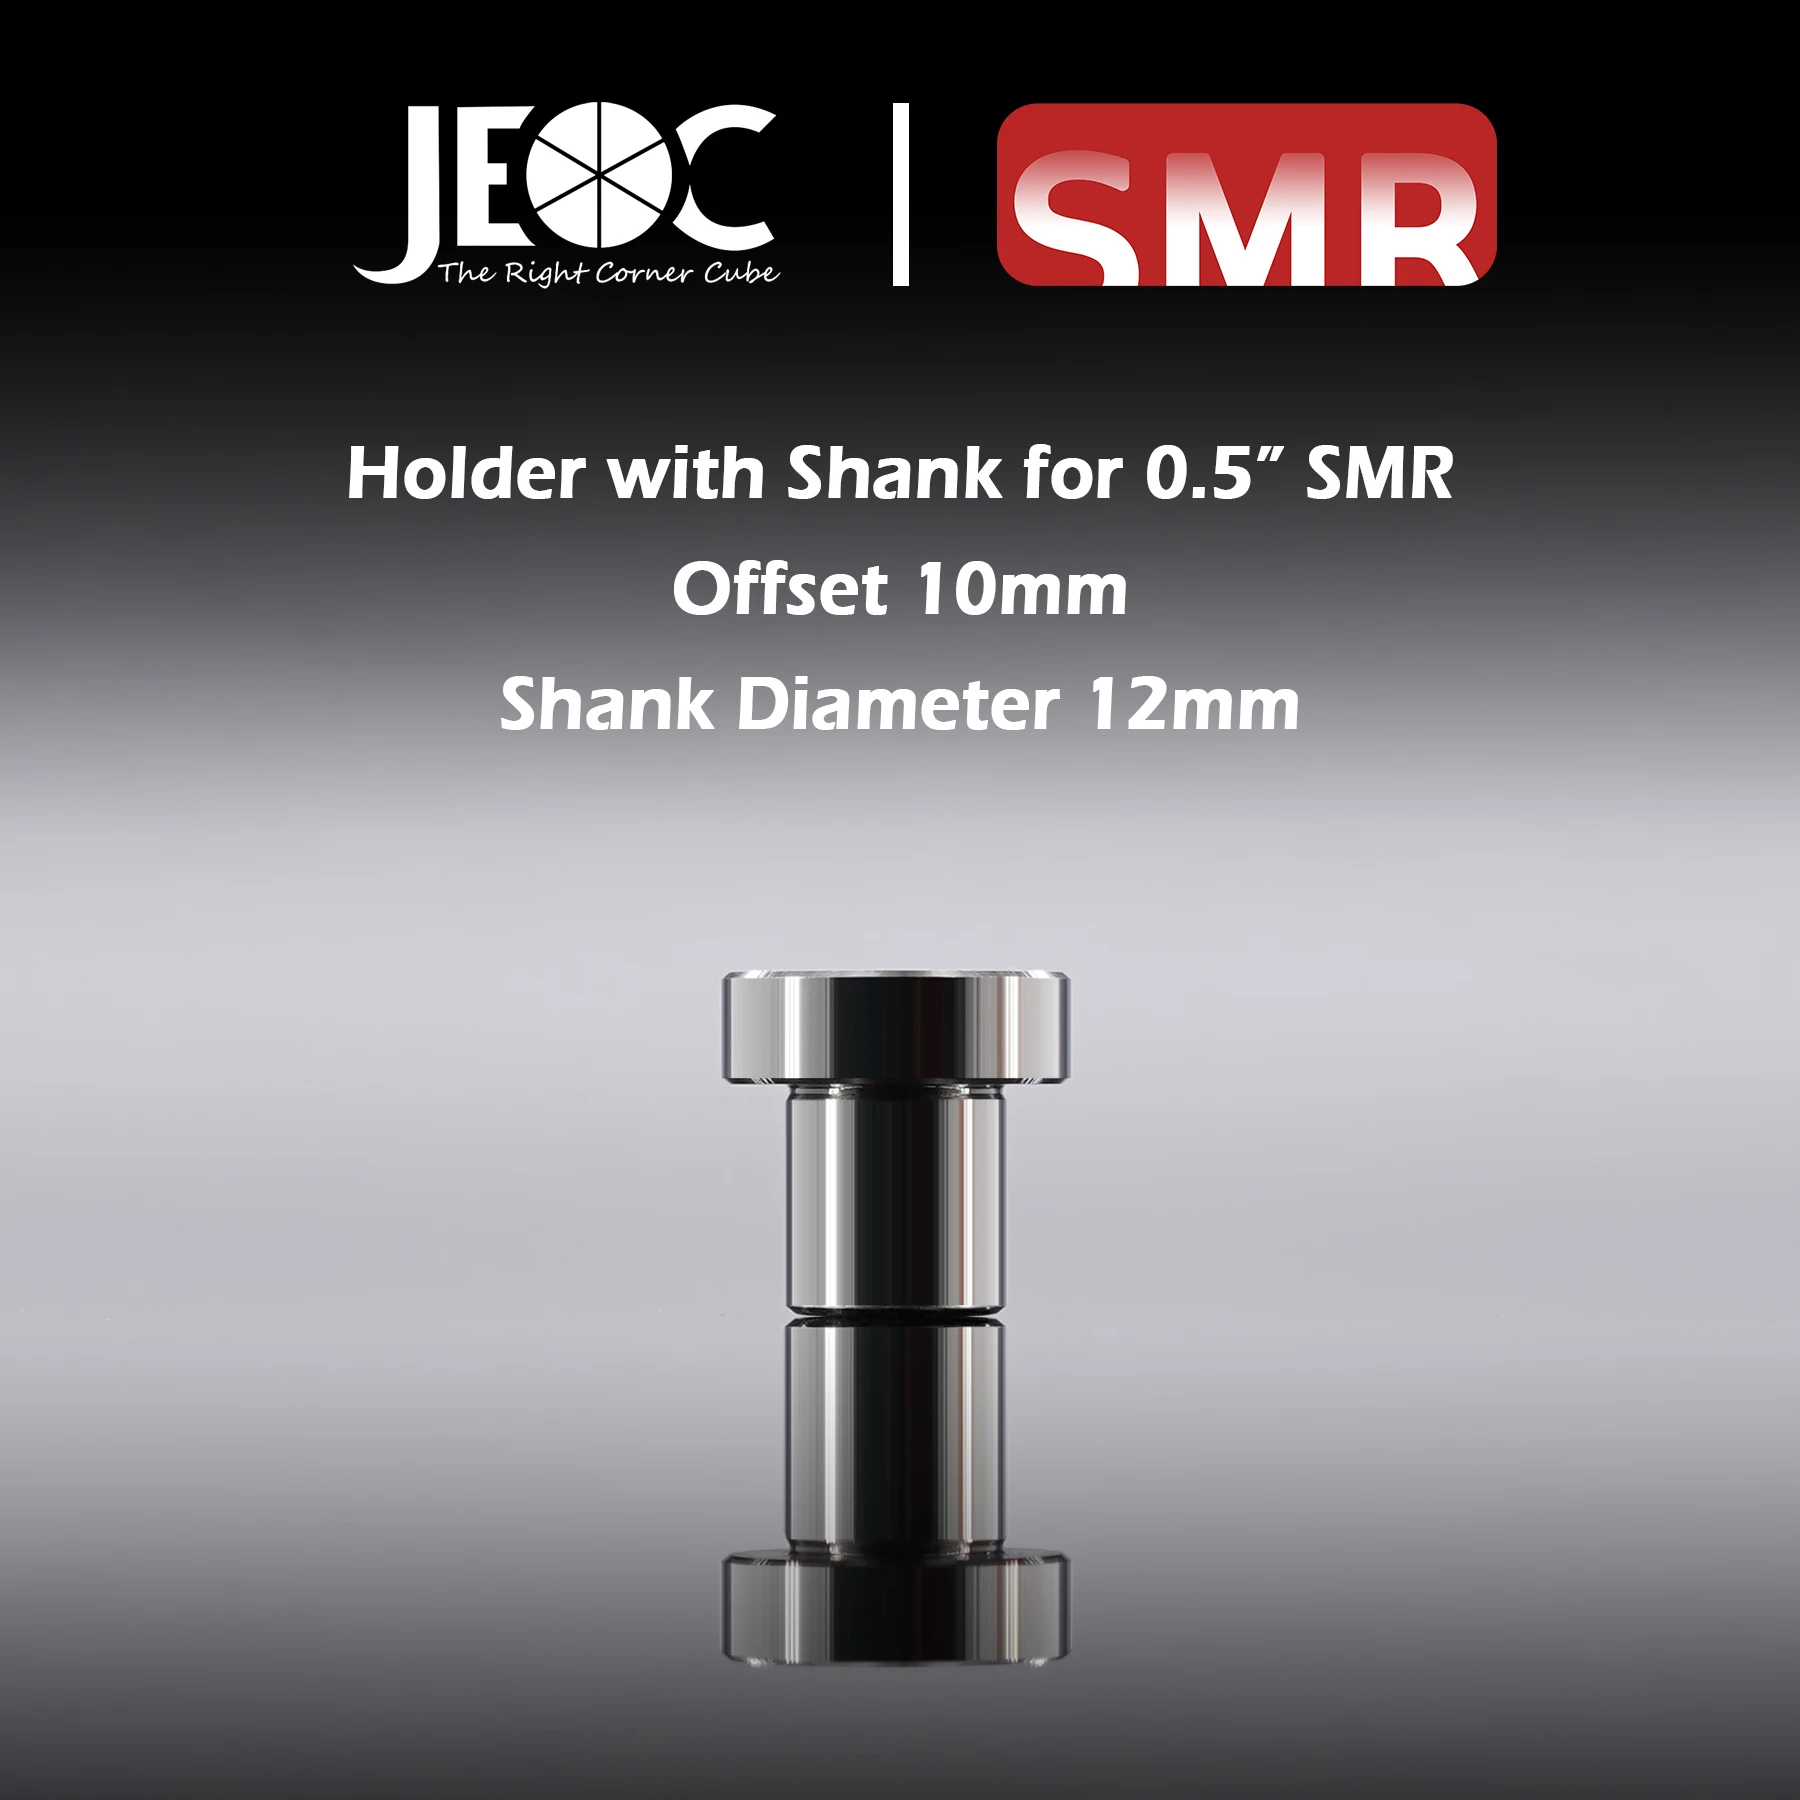 

JEOC Magnetic Holder with Shank for 0.5" SMR, 10mm offset, 12mm Shank diameter, 0.5" Ball Probe Seat